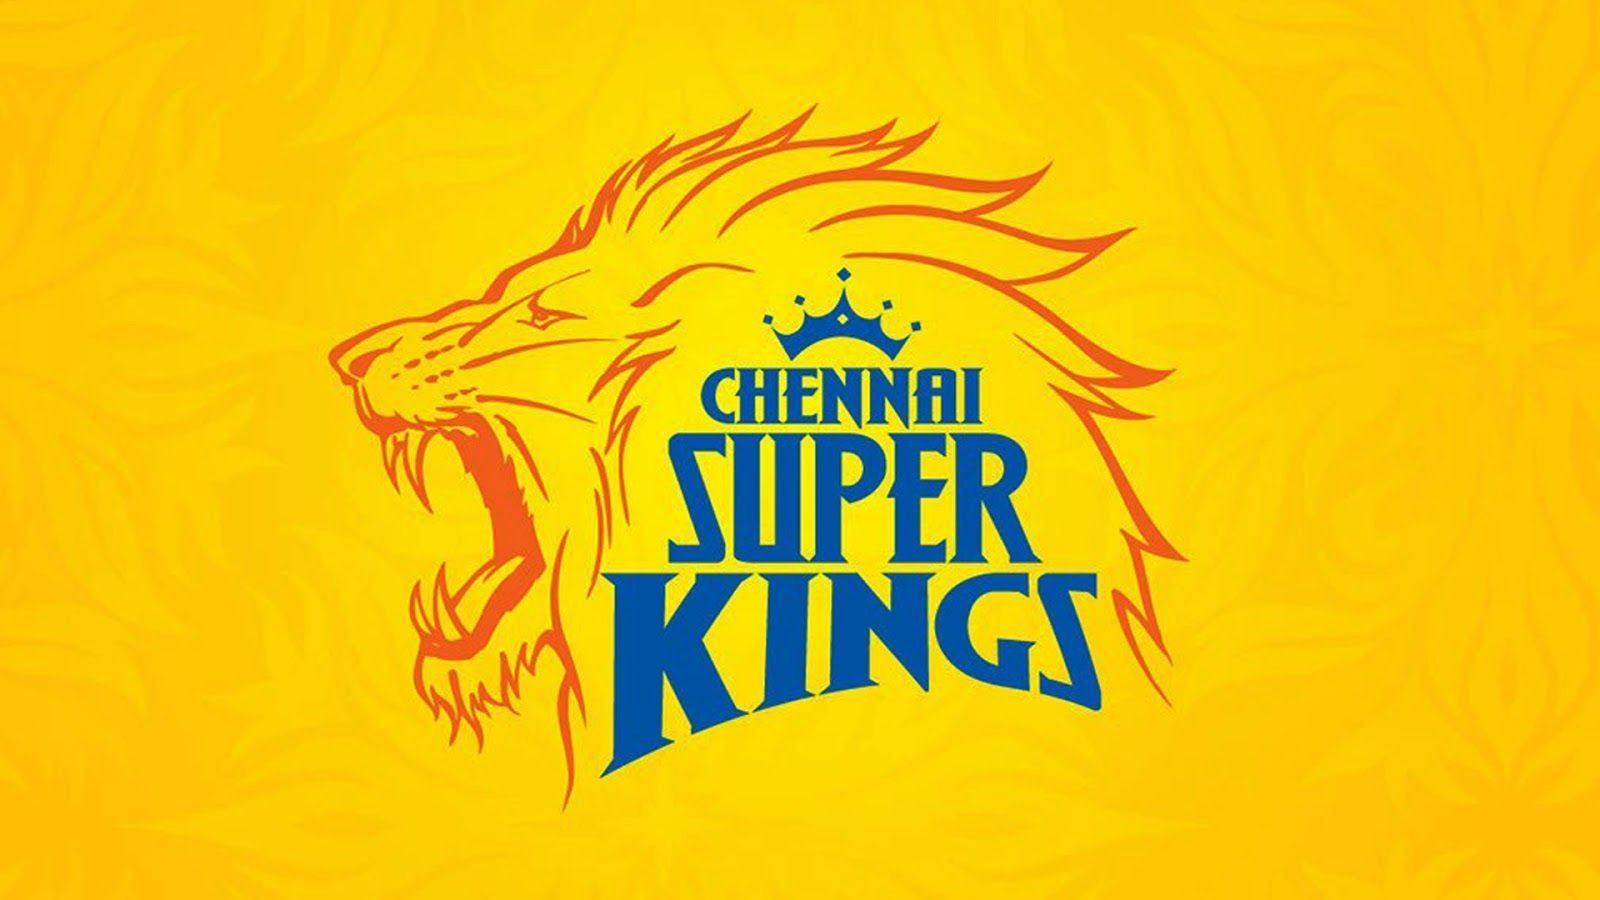 CHENNAI SUPER KINGS. Chennai super kings, Dhoni wallpaper, Ms dhoni wallpaper